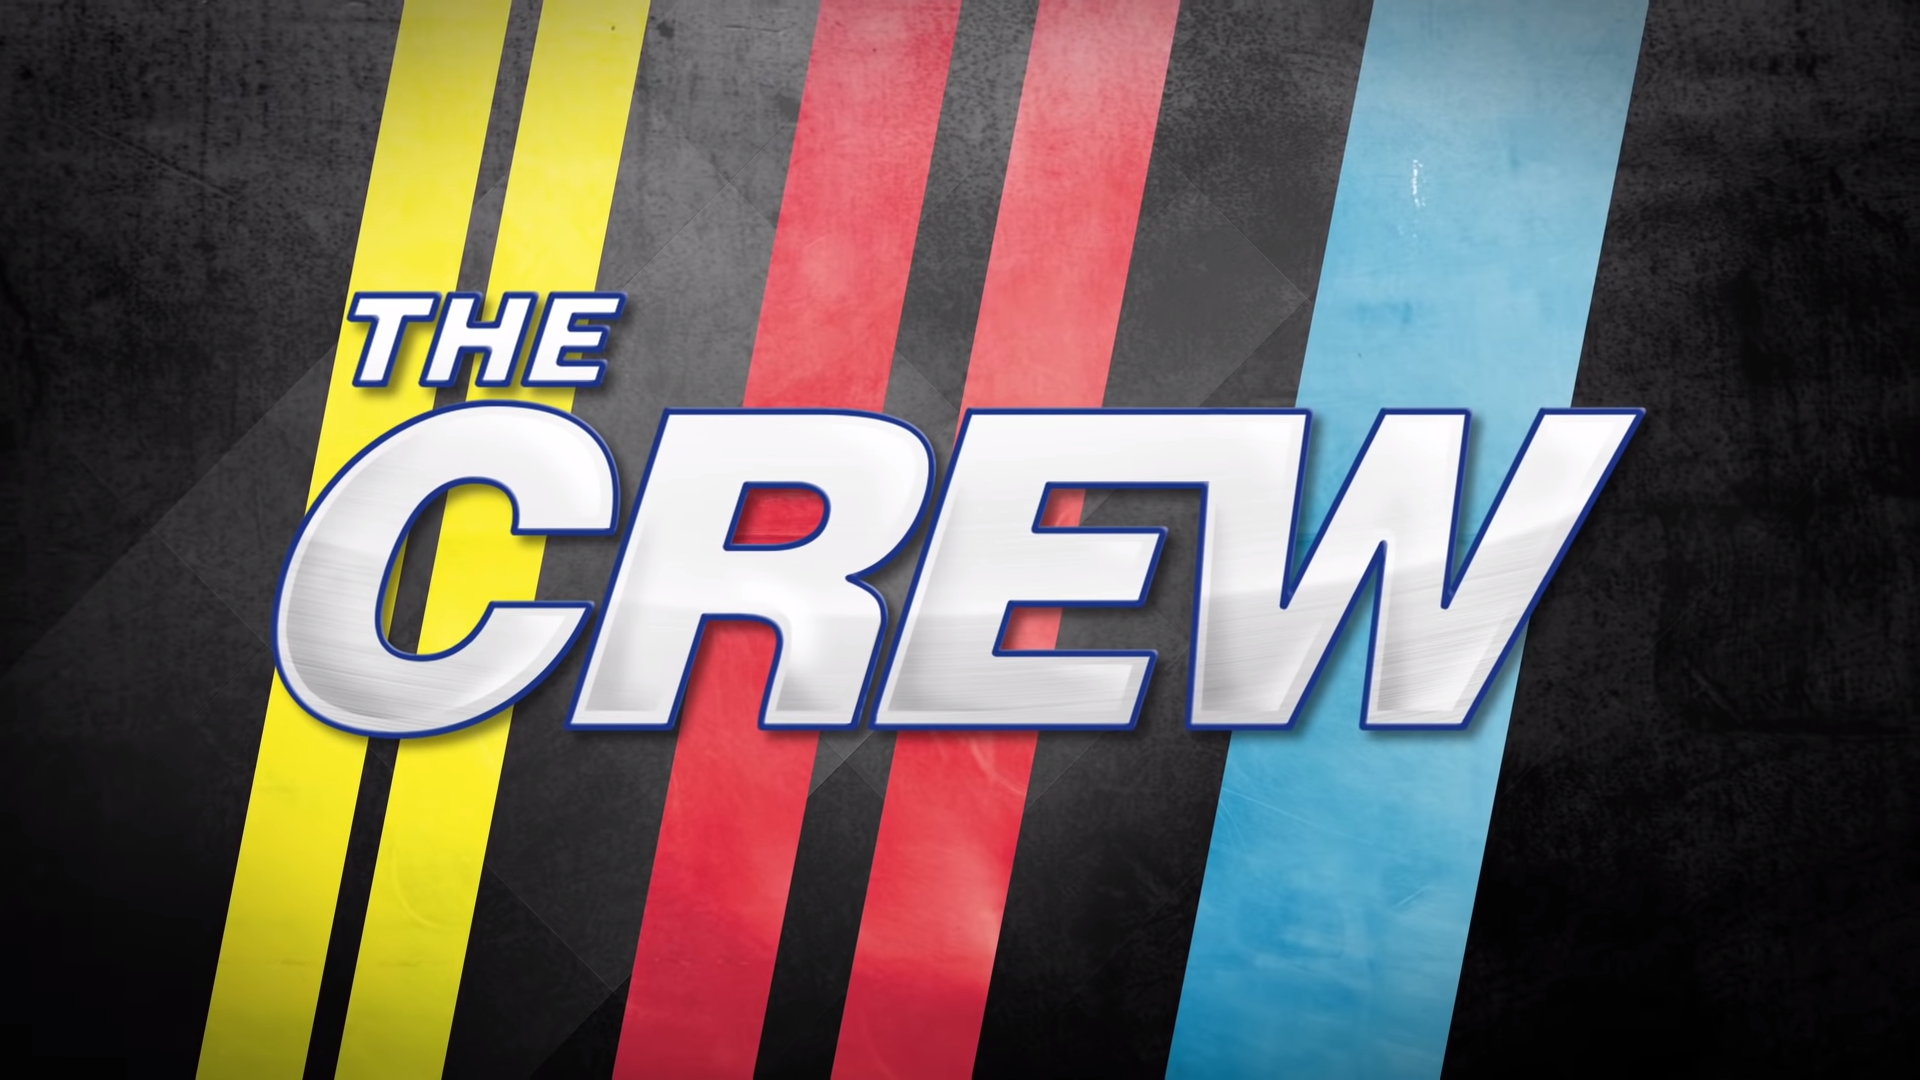 Netflix The Crew Trailer, Netflix Sports Series, Netflix Comedy Series, Netflix NASCAR Show, Coming to Netflix in February 2021